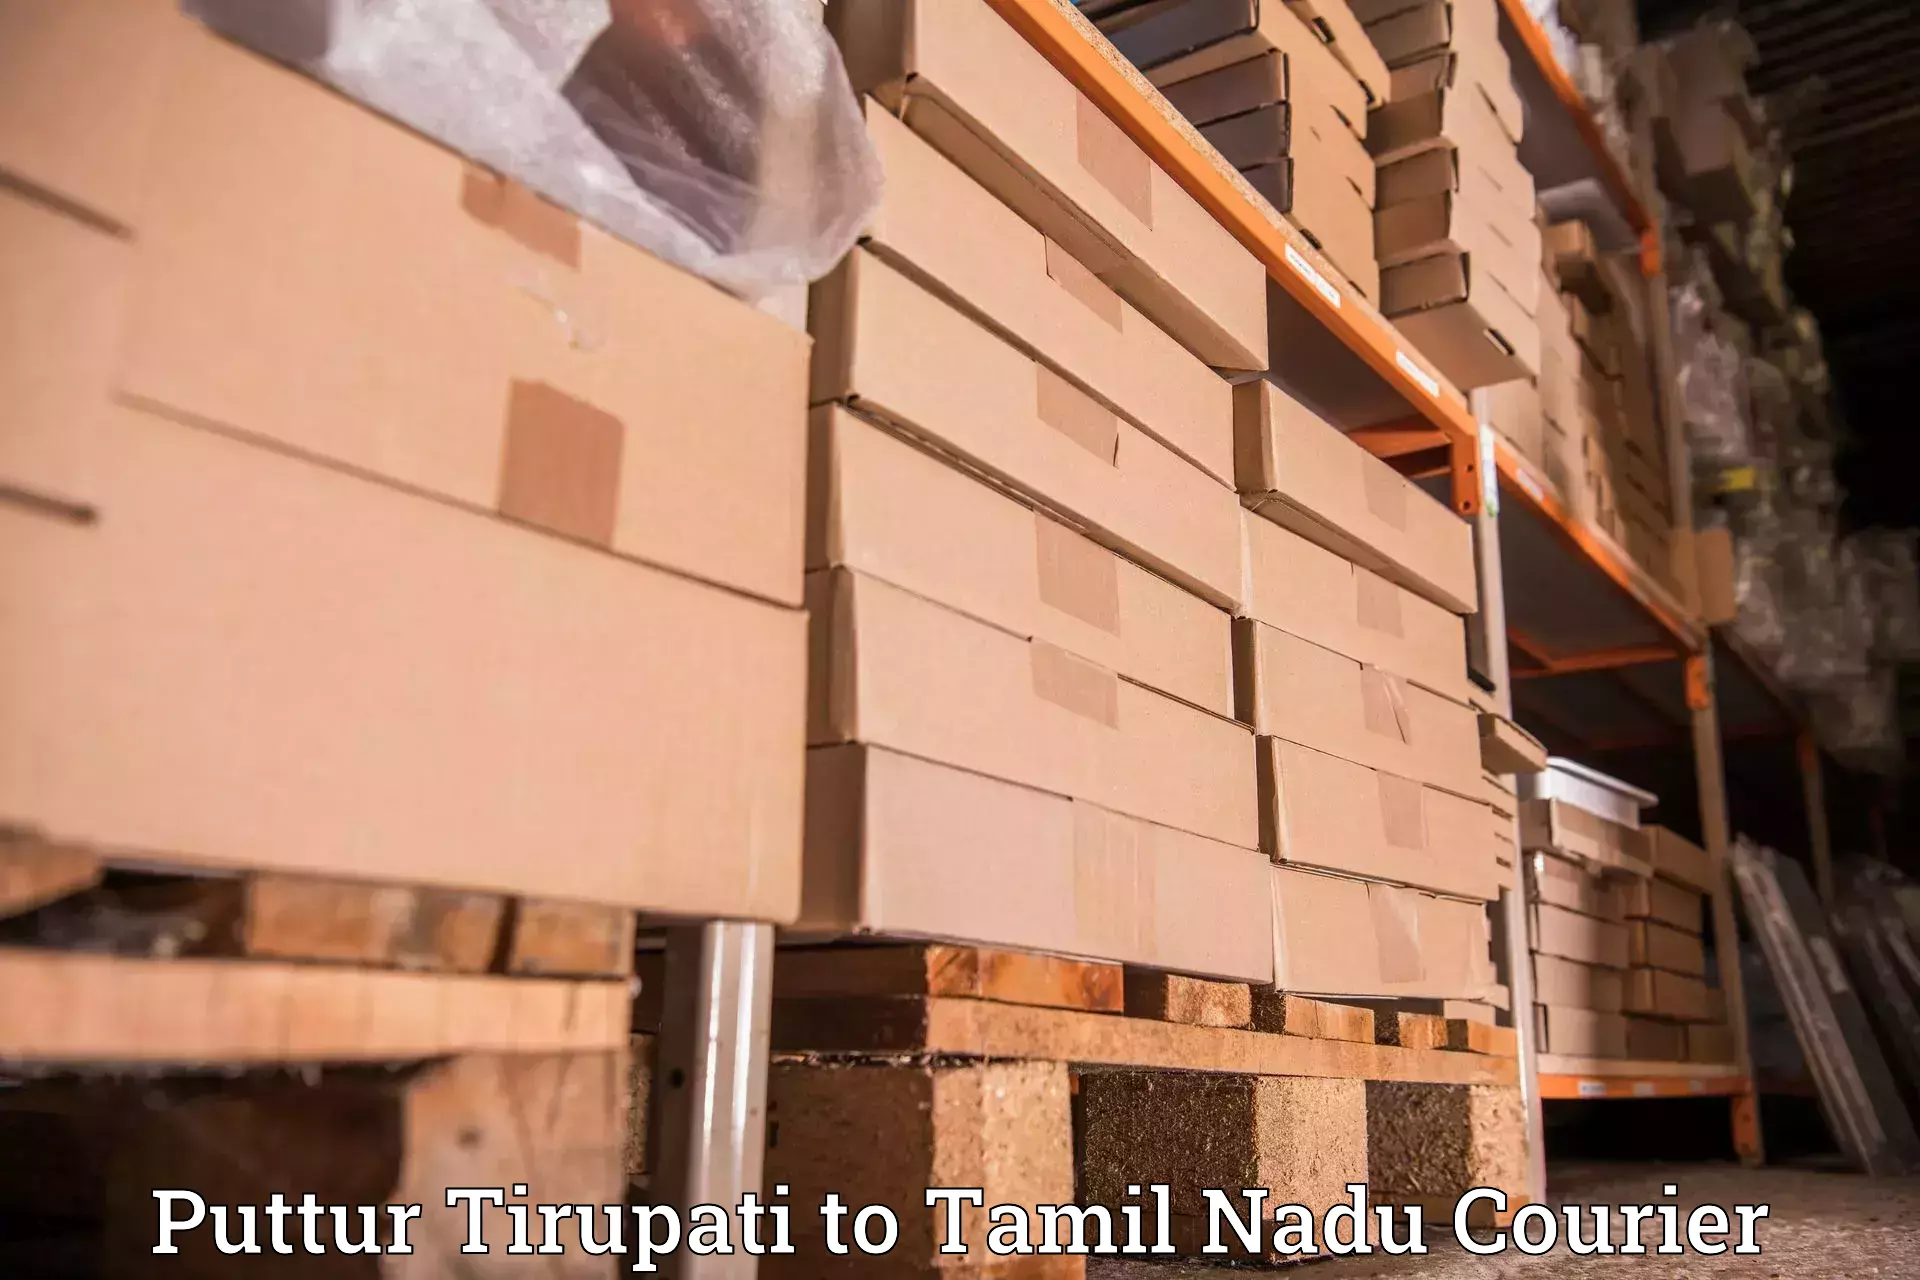 Courier service comparison Puttur Tirupati to Tamil Nadu